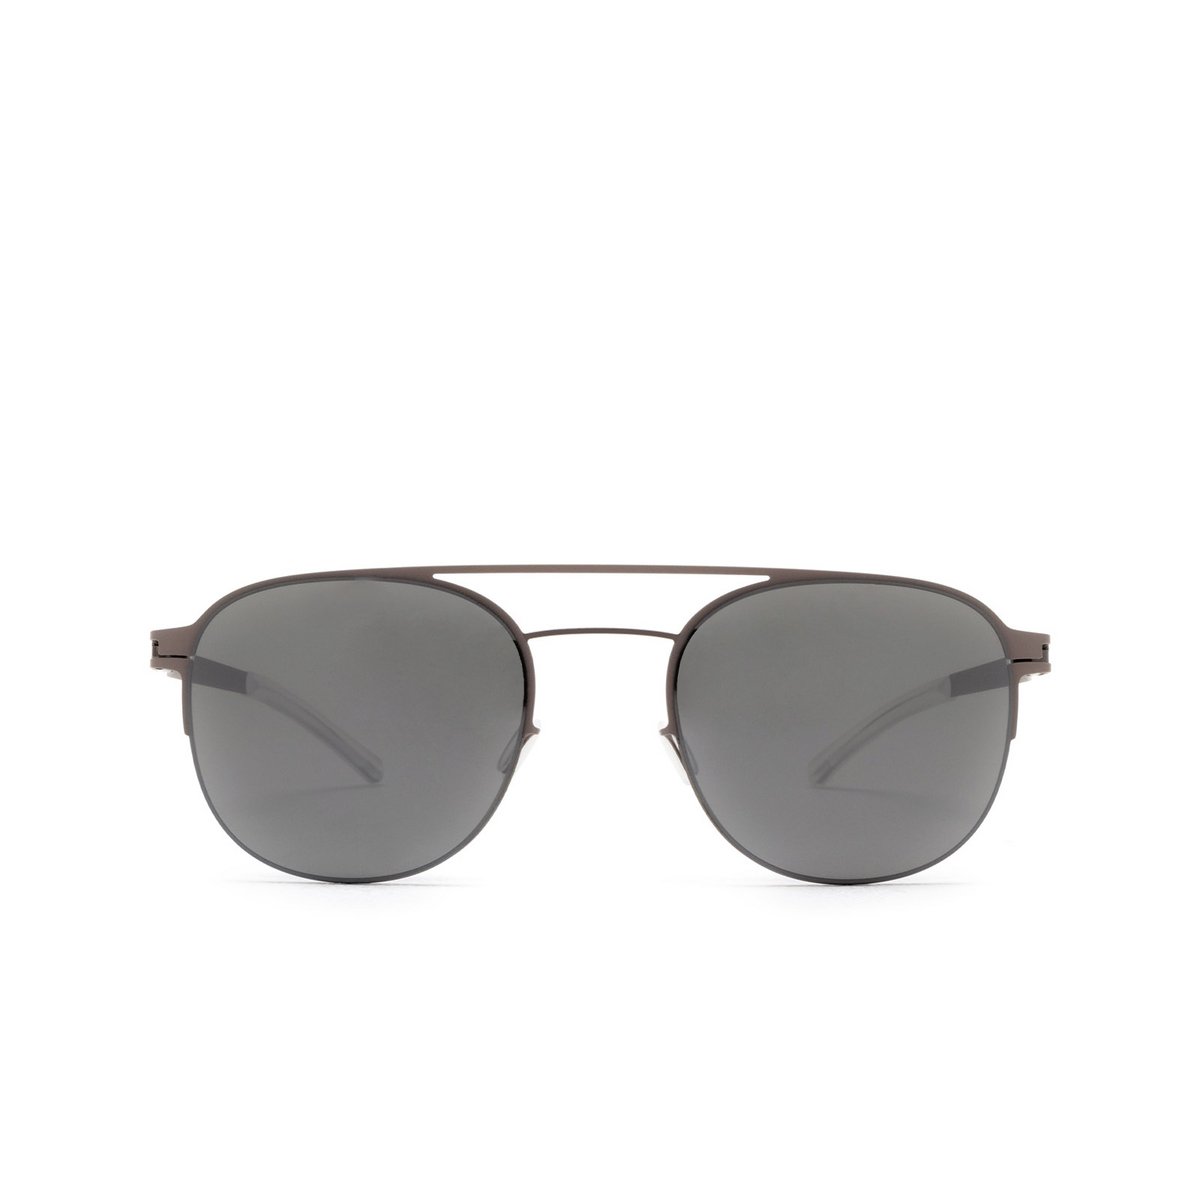 Mykita PARK SUN Sunglasses 235 Shiny Graphite/Mole Grey - front view